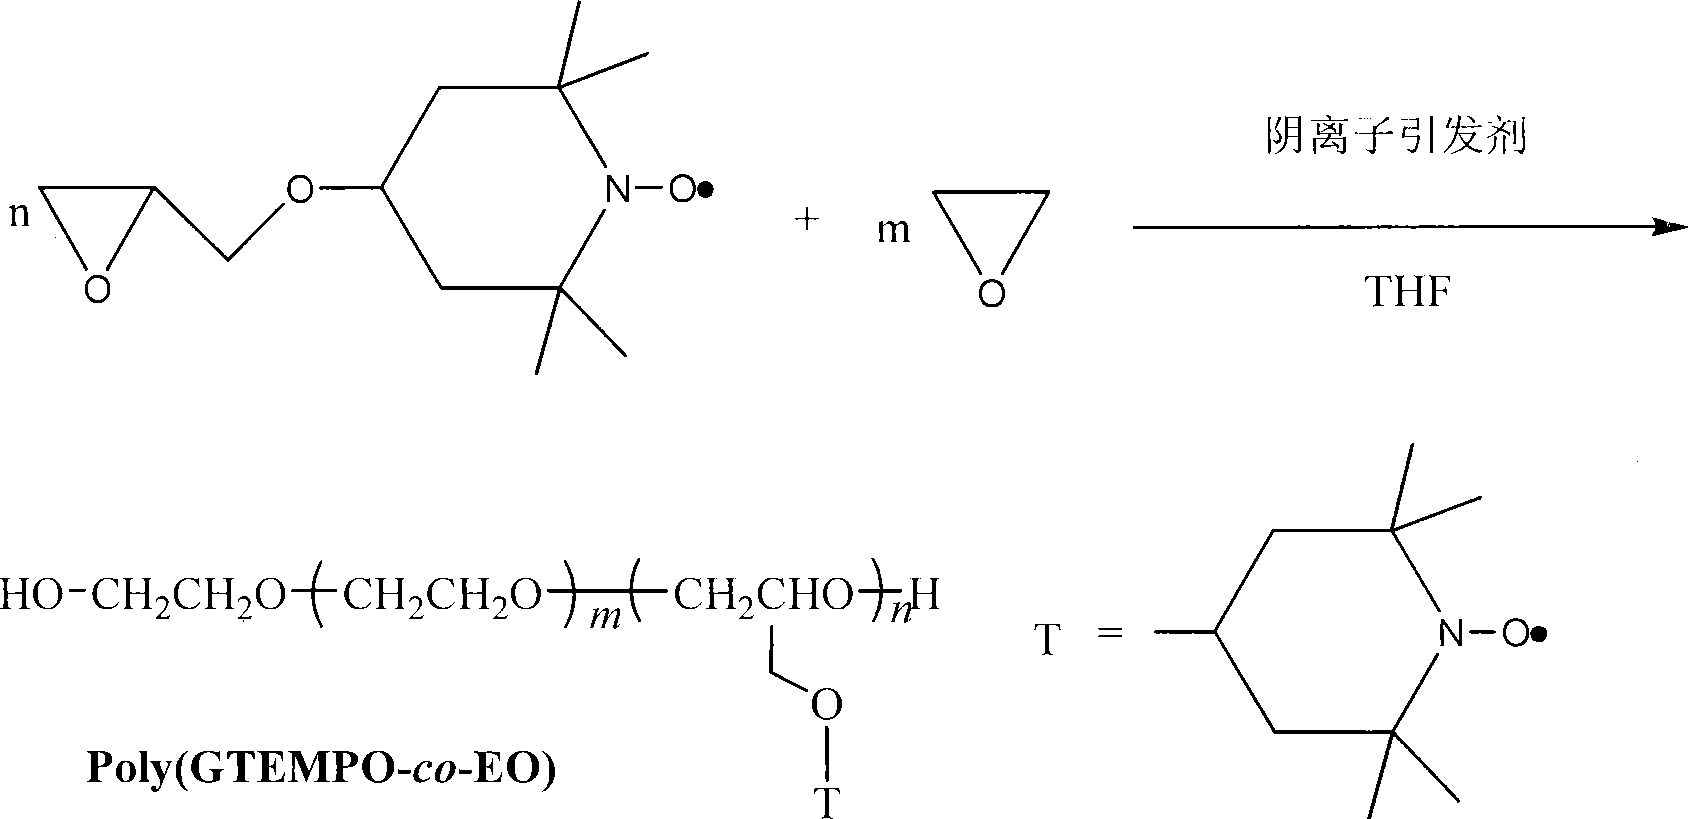 Amphiphilic macrocyclic polymer and preparation method